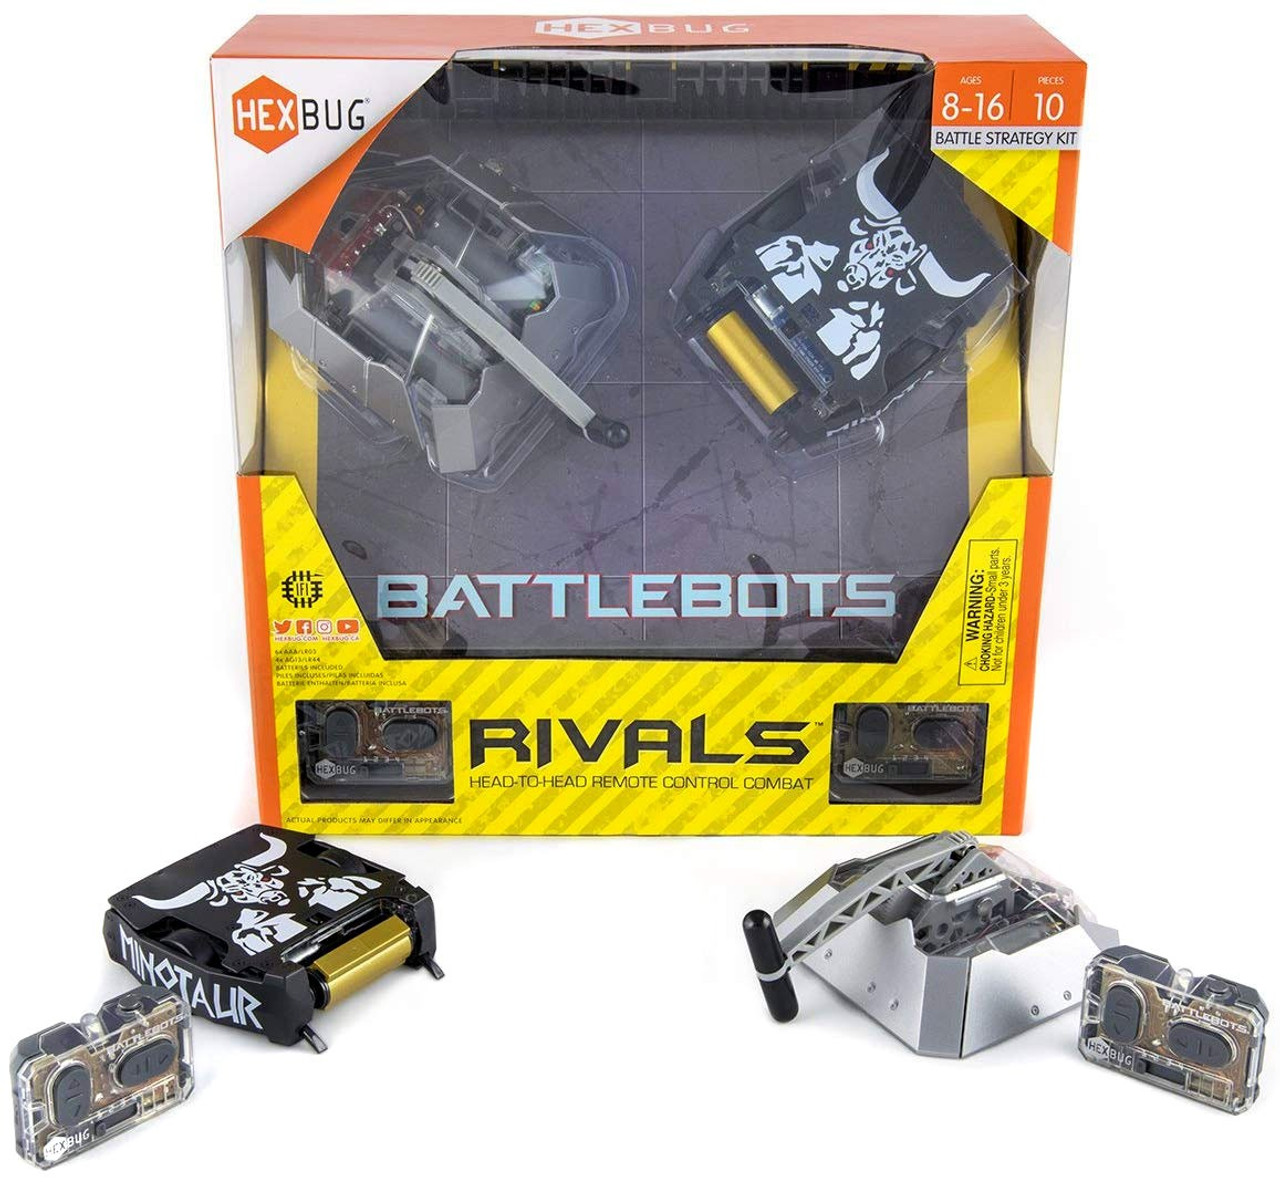 Hexbug Battlebots Rivals Beta Vs Minotaur Battle Strategy Kit Innovation First Toywiz - gun series overview default rarety roblox amino